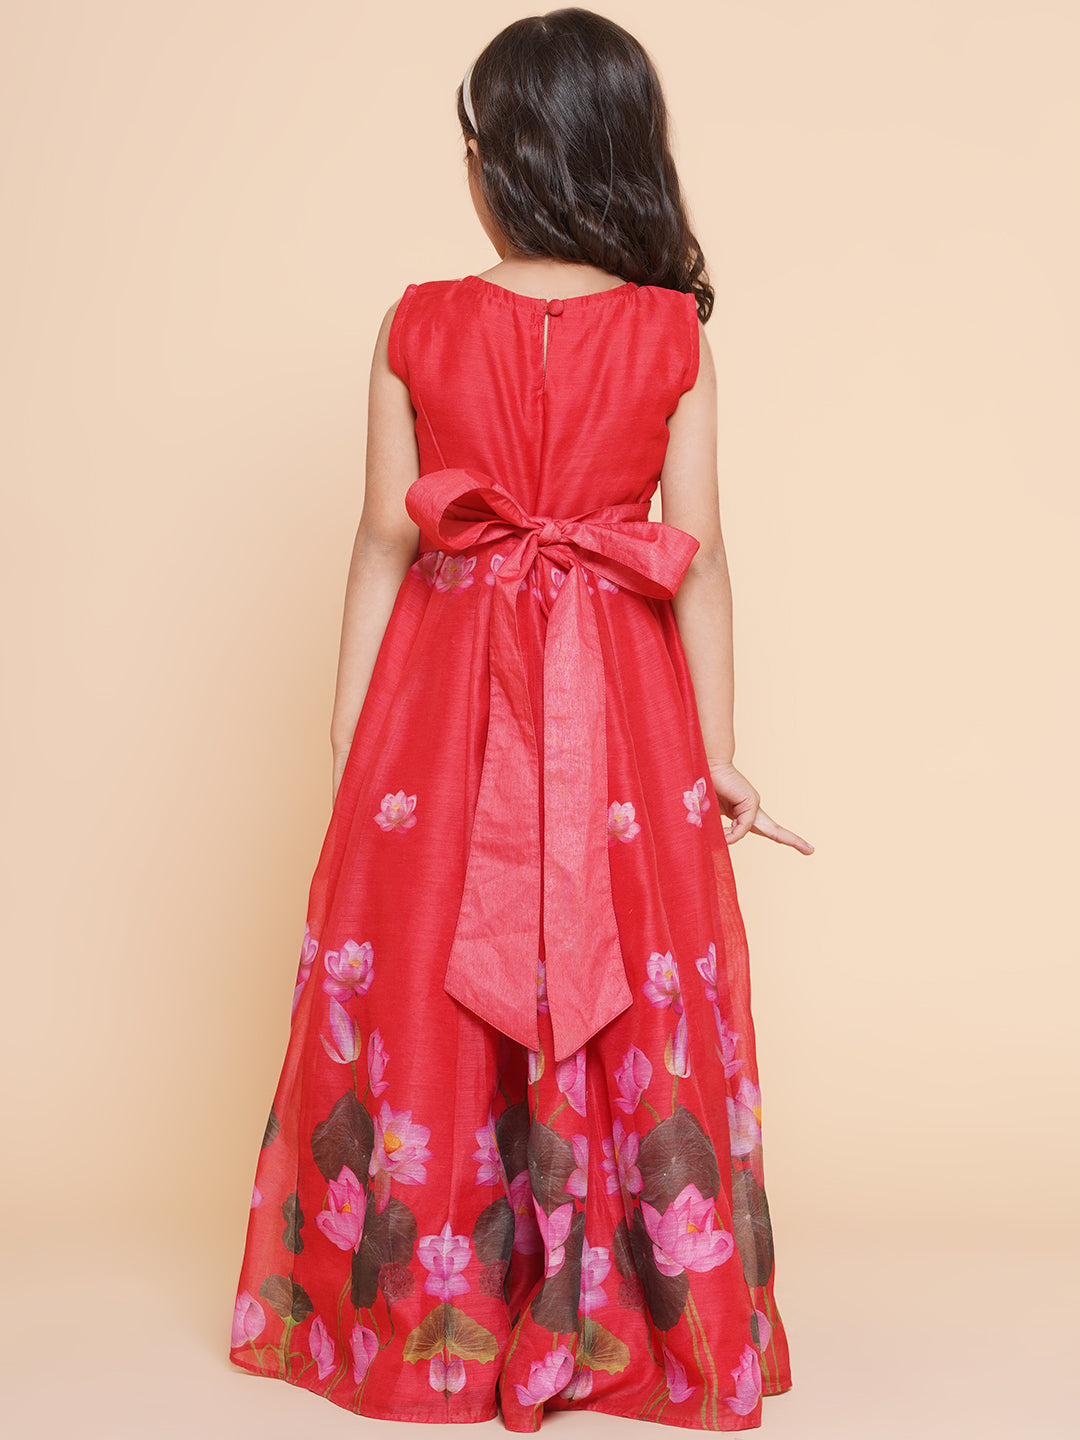 Bitiya By Bhama Girls Red Floral Printed Dress